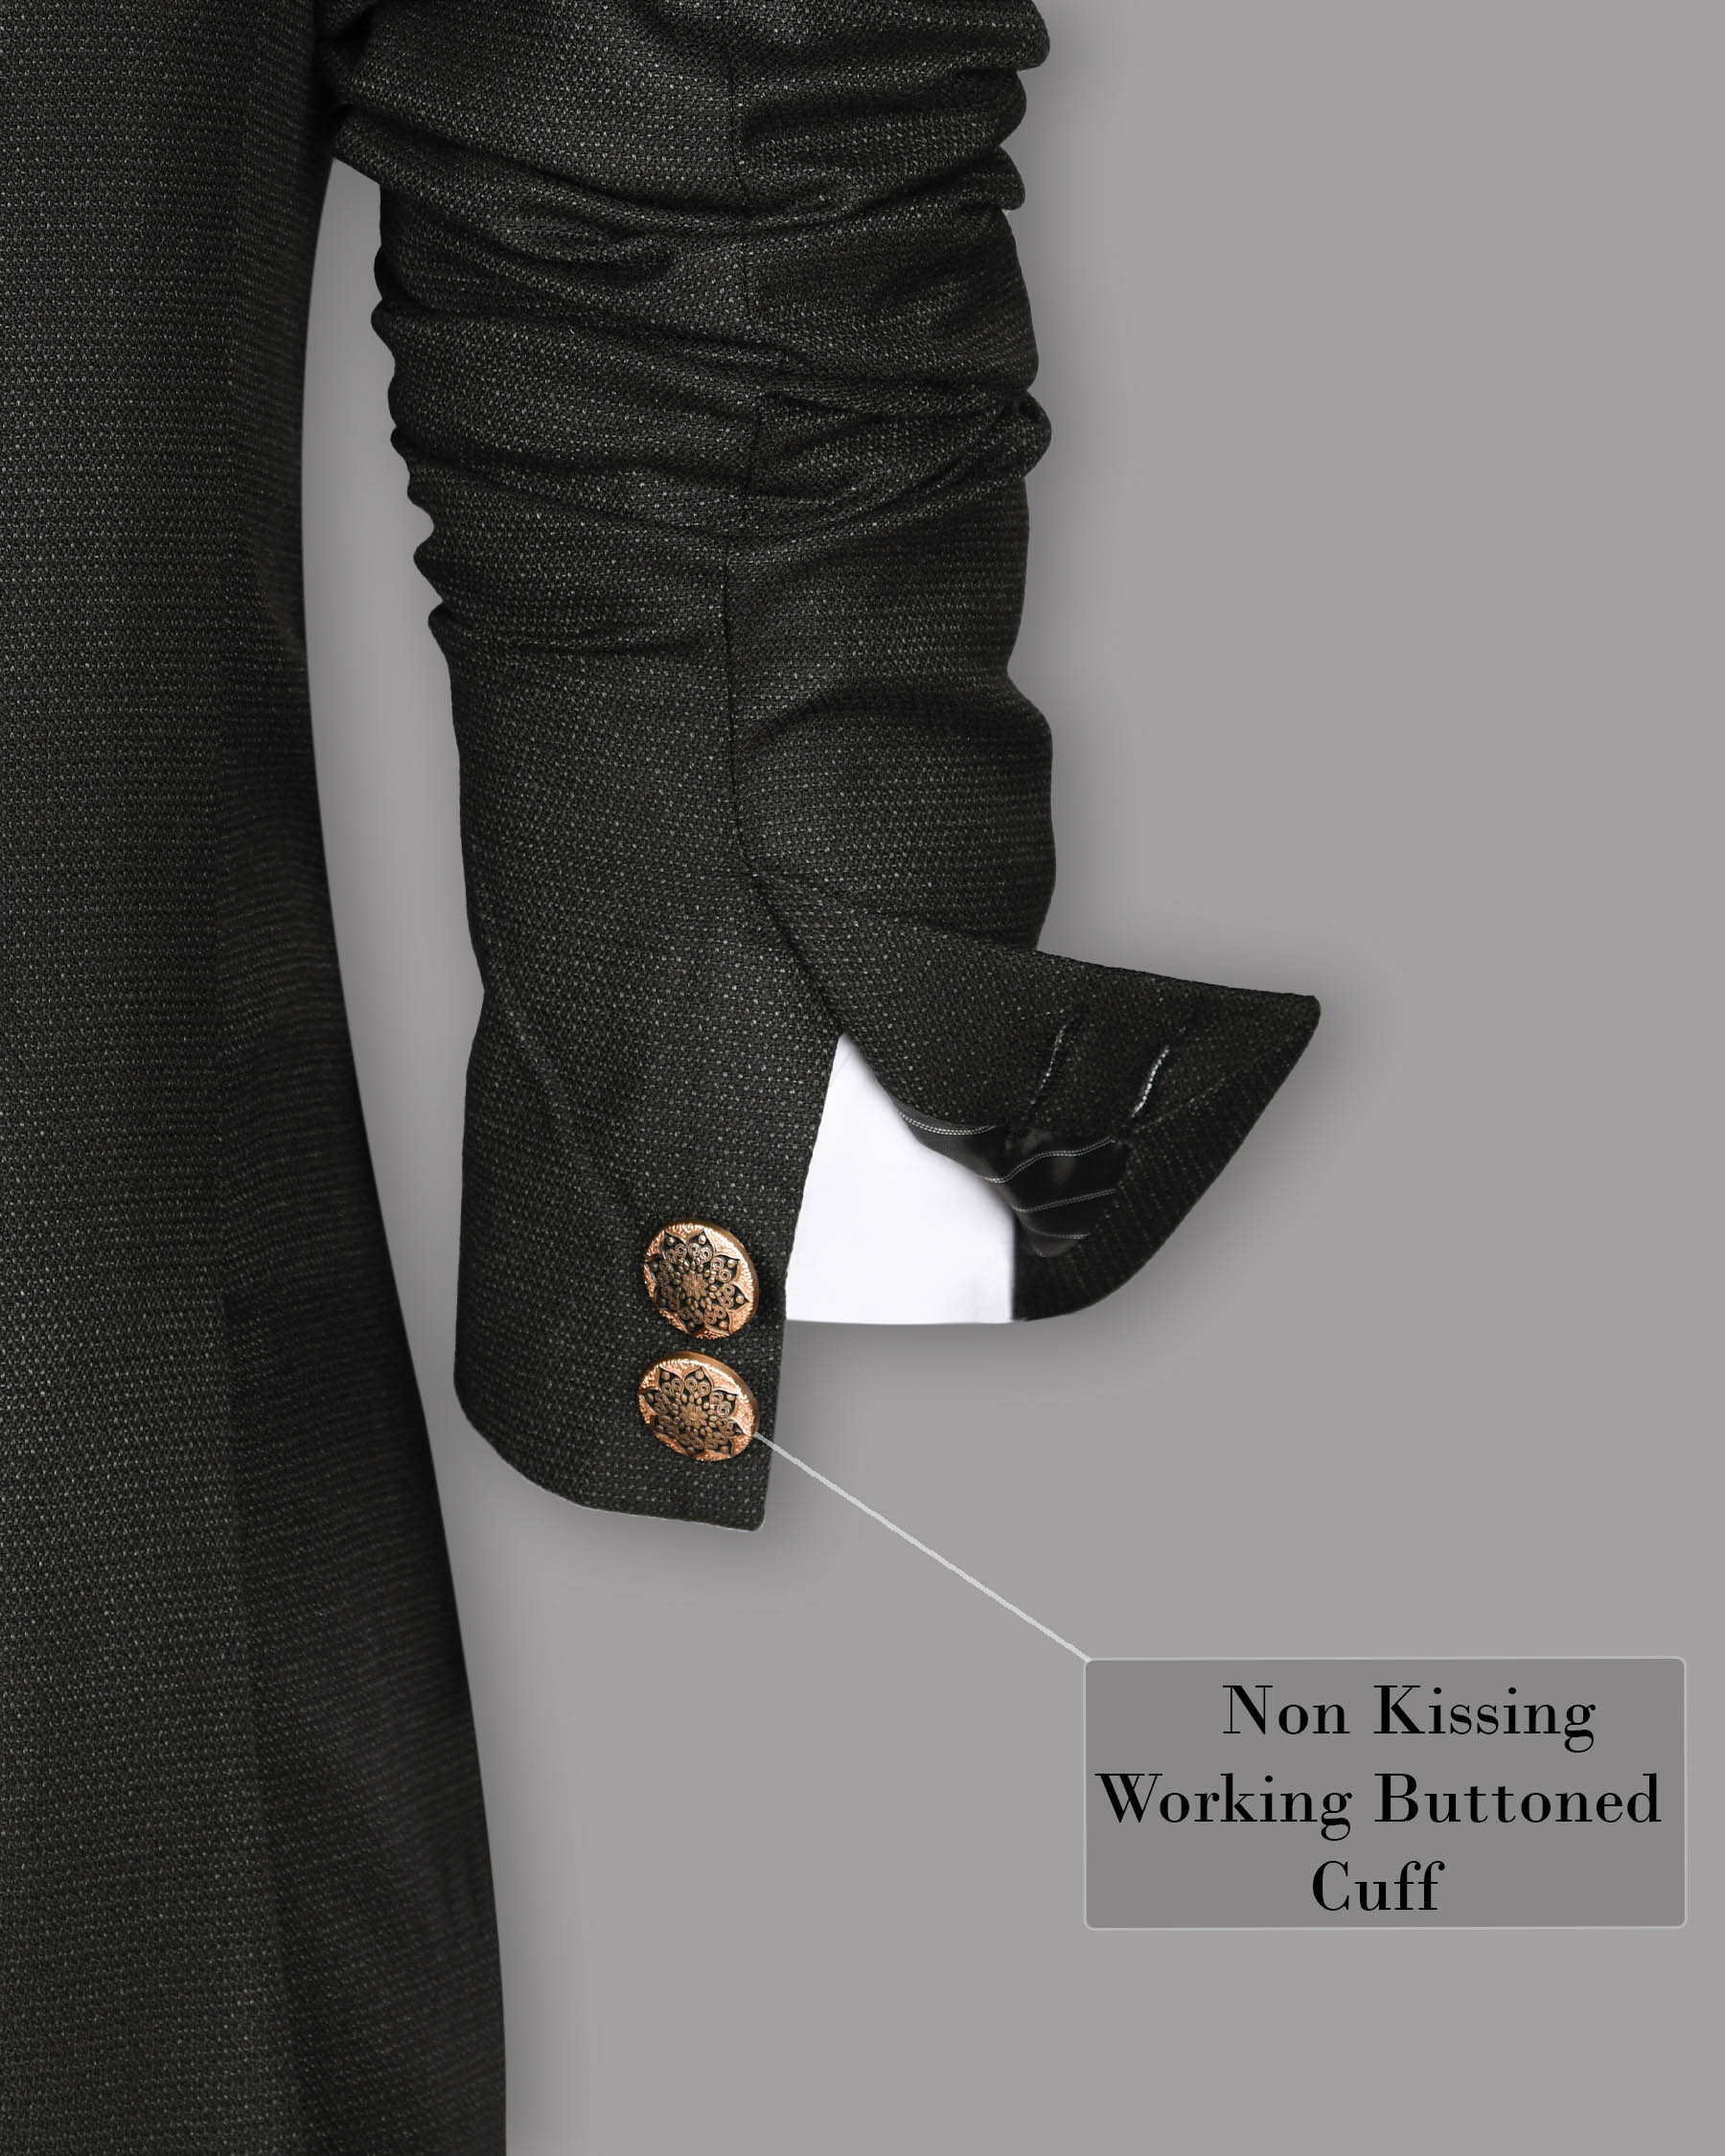 Jade Black with Subtle Grey texture Cross Placket Bandhgala/Mandarin Wool-Silk blend Blazer